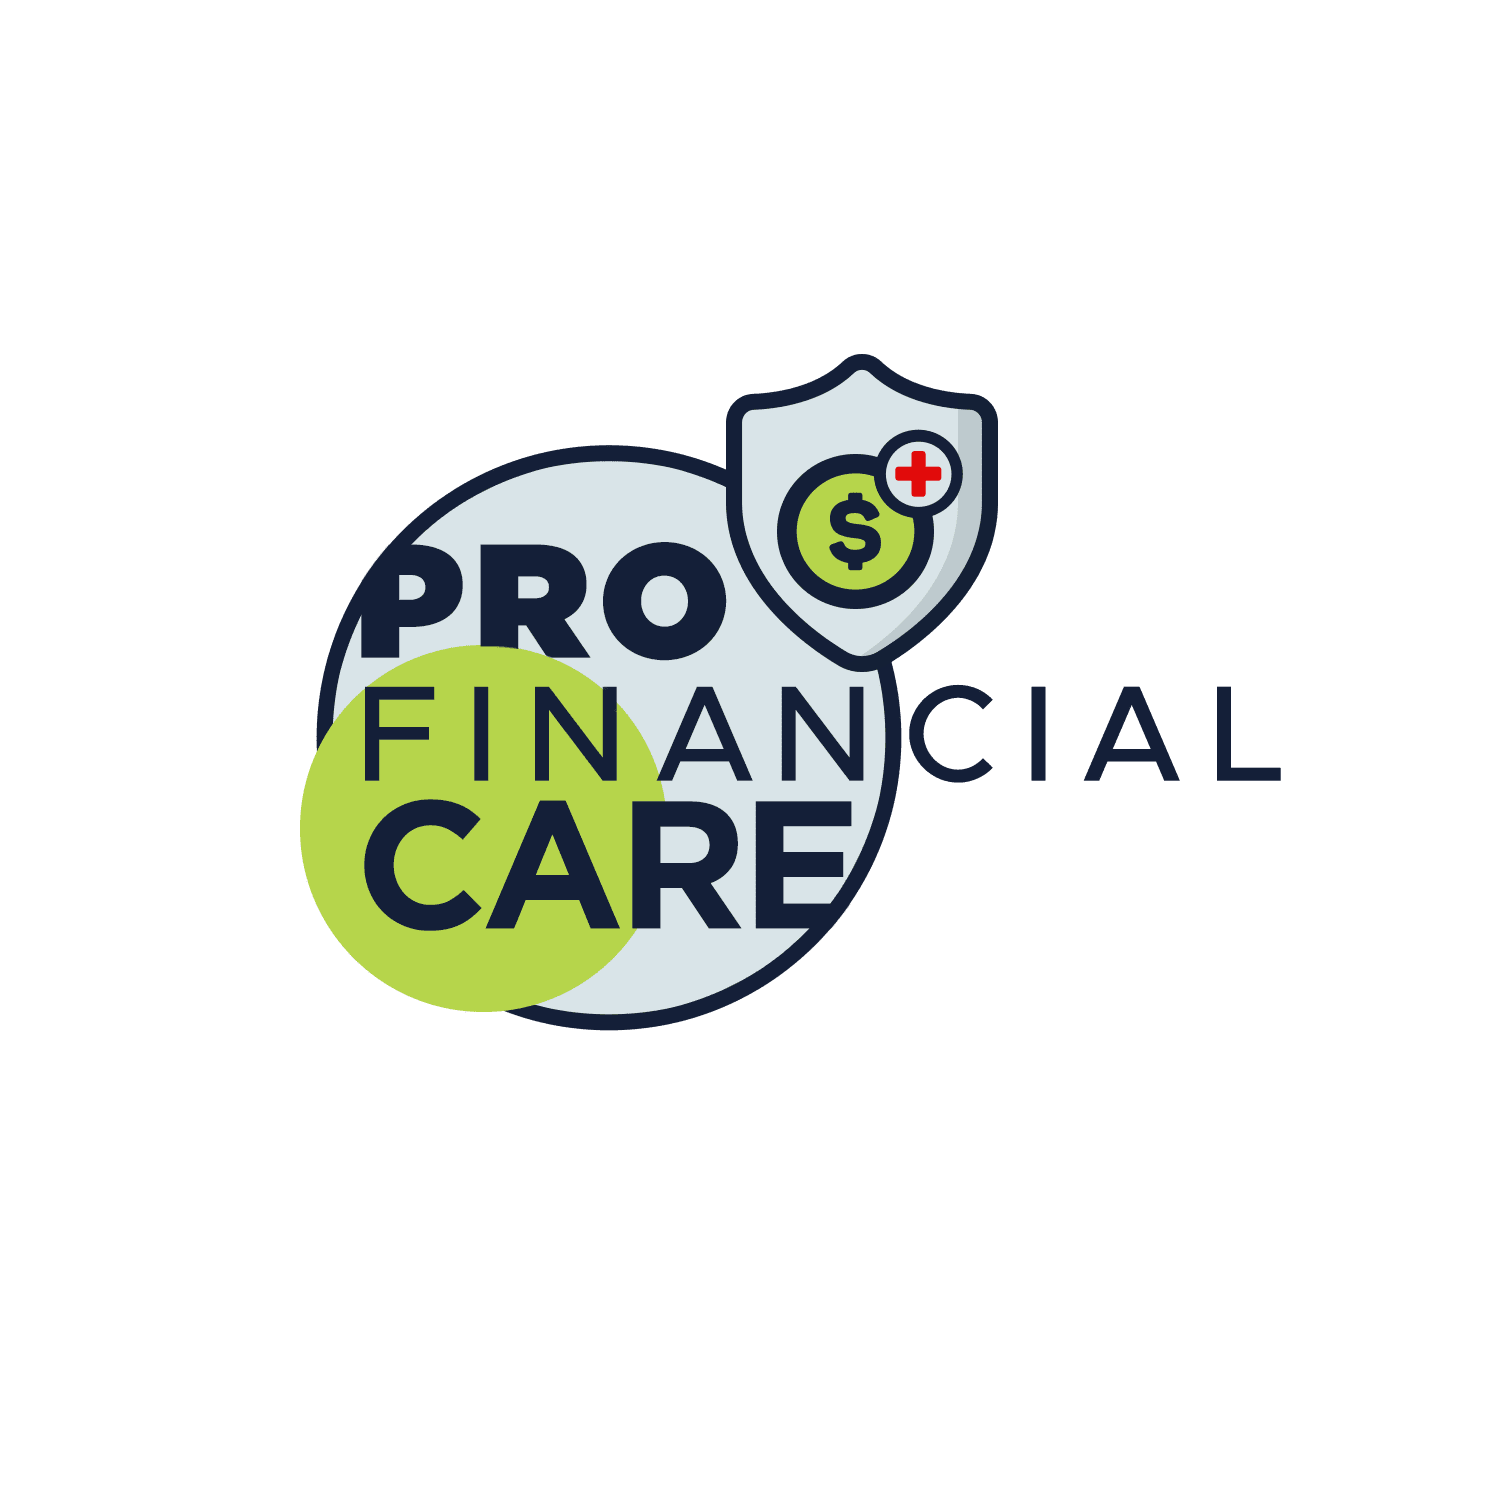 Pro Financial Care